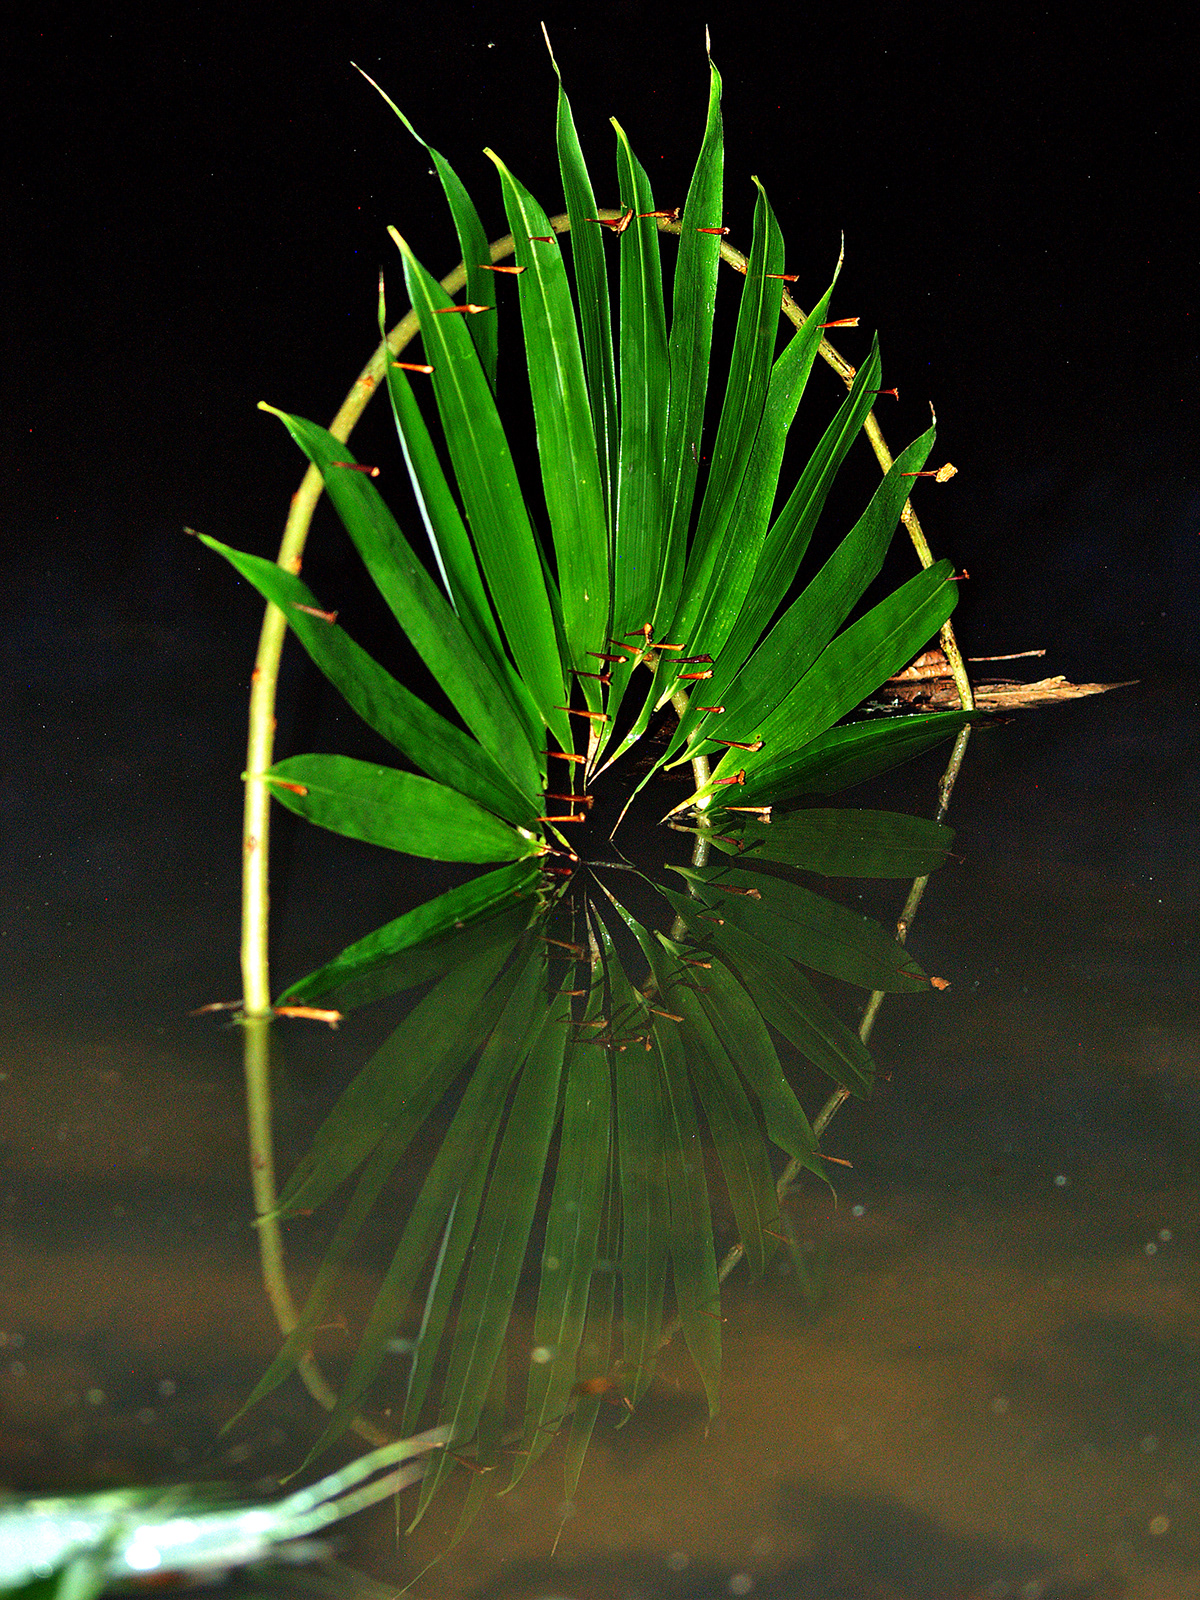 landart cercle circle mirror miroir reflet eau water feuille leaf iris eye OEIL épine wood